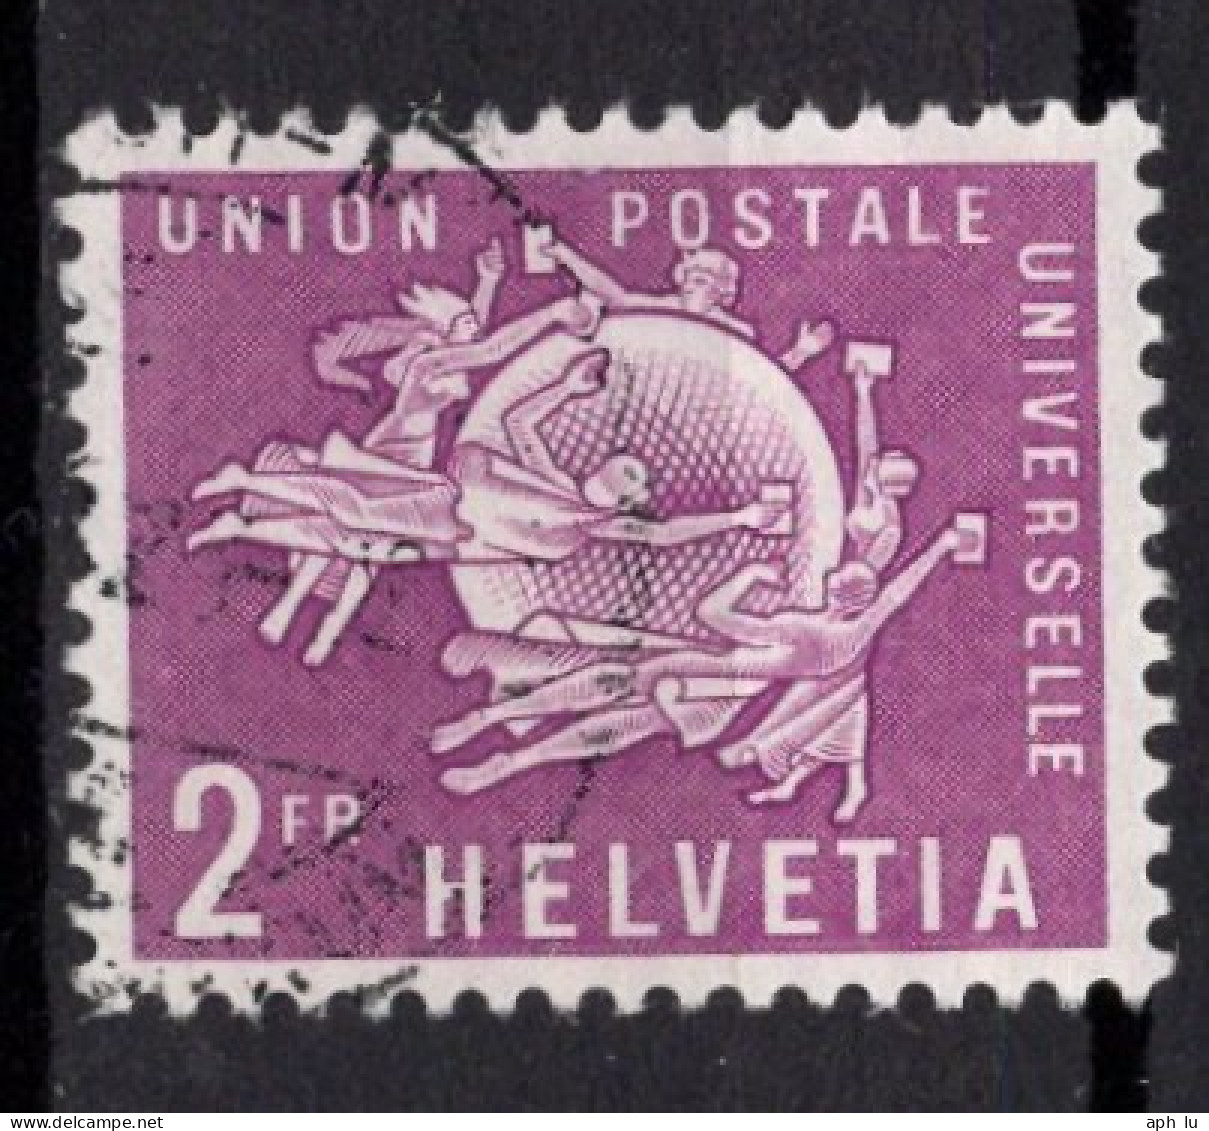 Union Postale Universelle (UPU) Gestempelt (h590206) - Dienstzegels